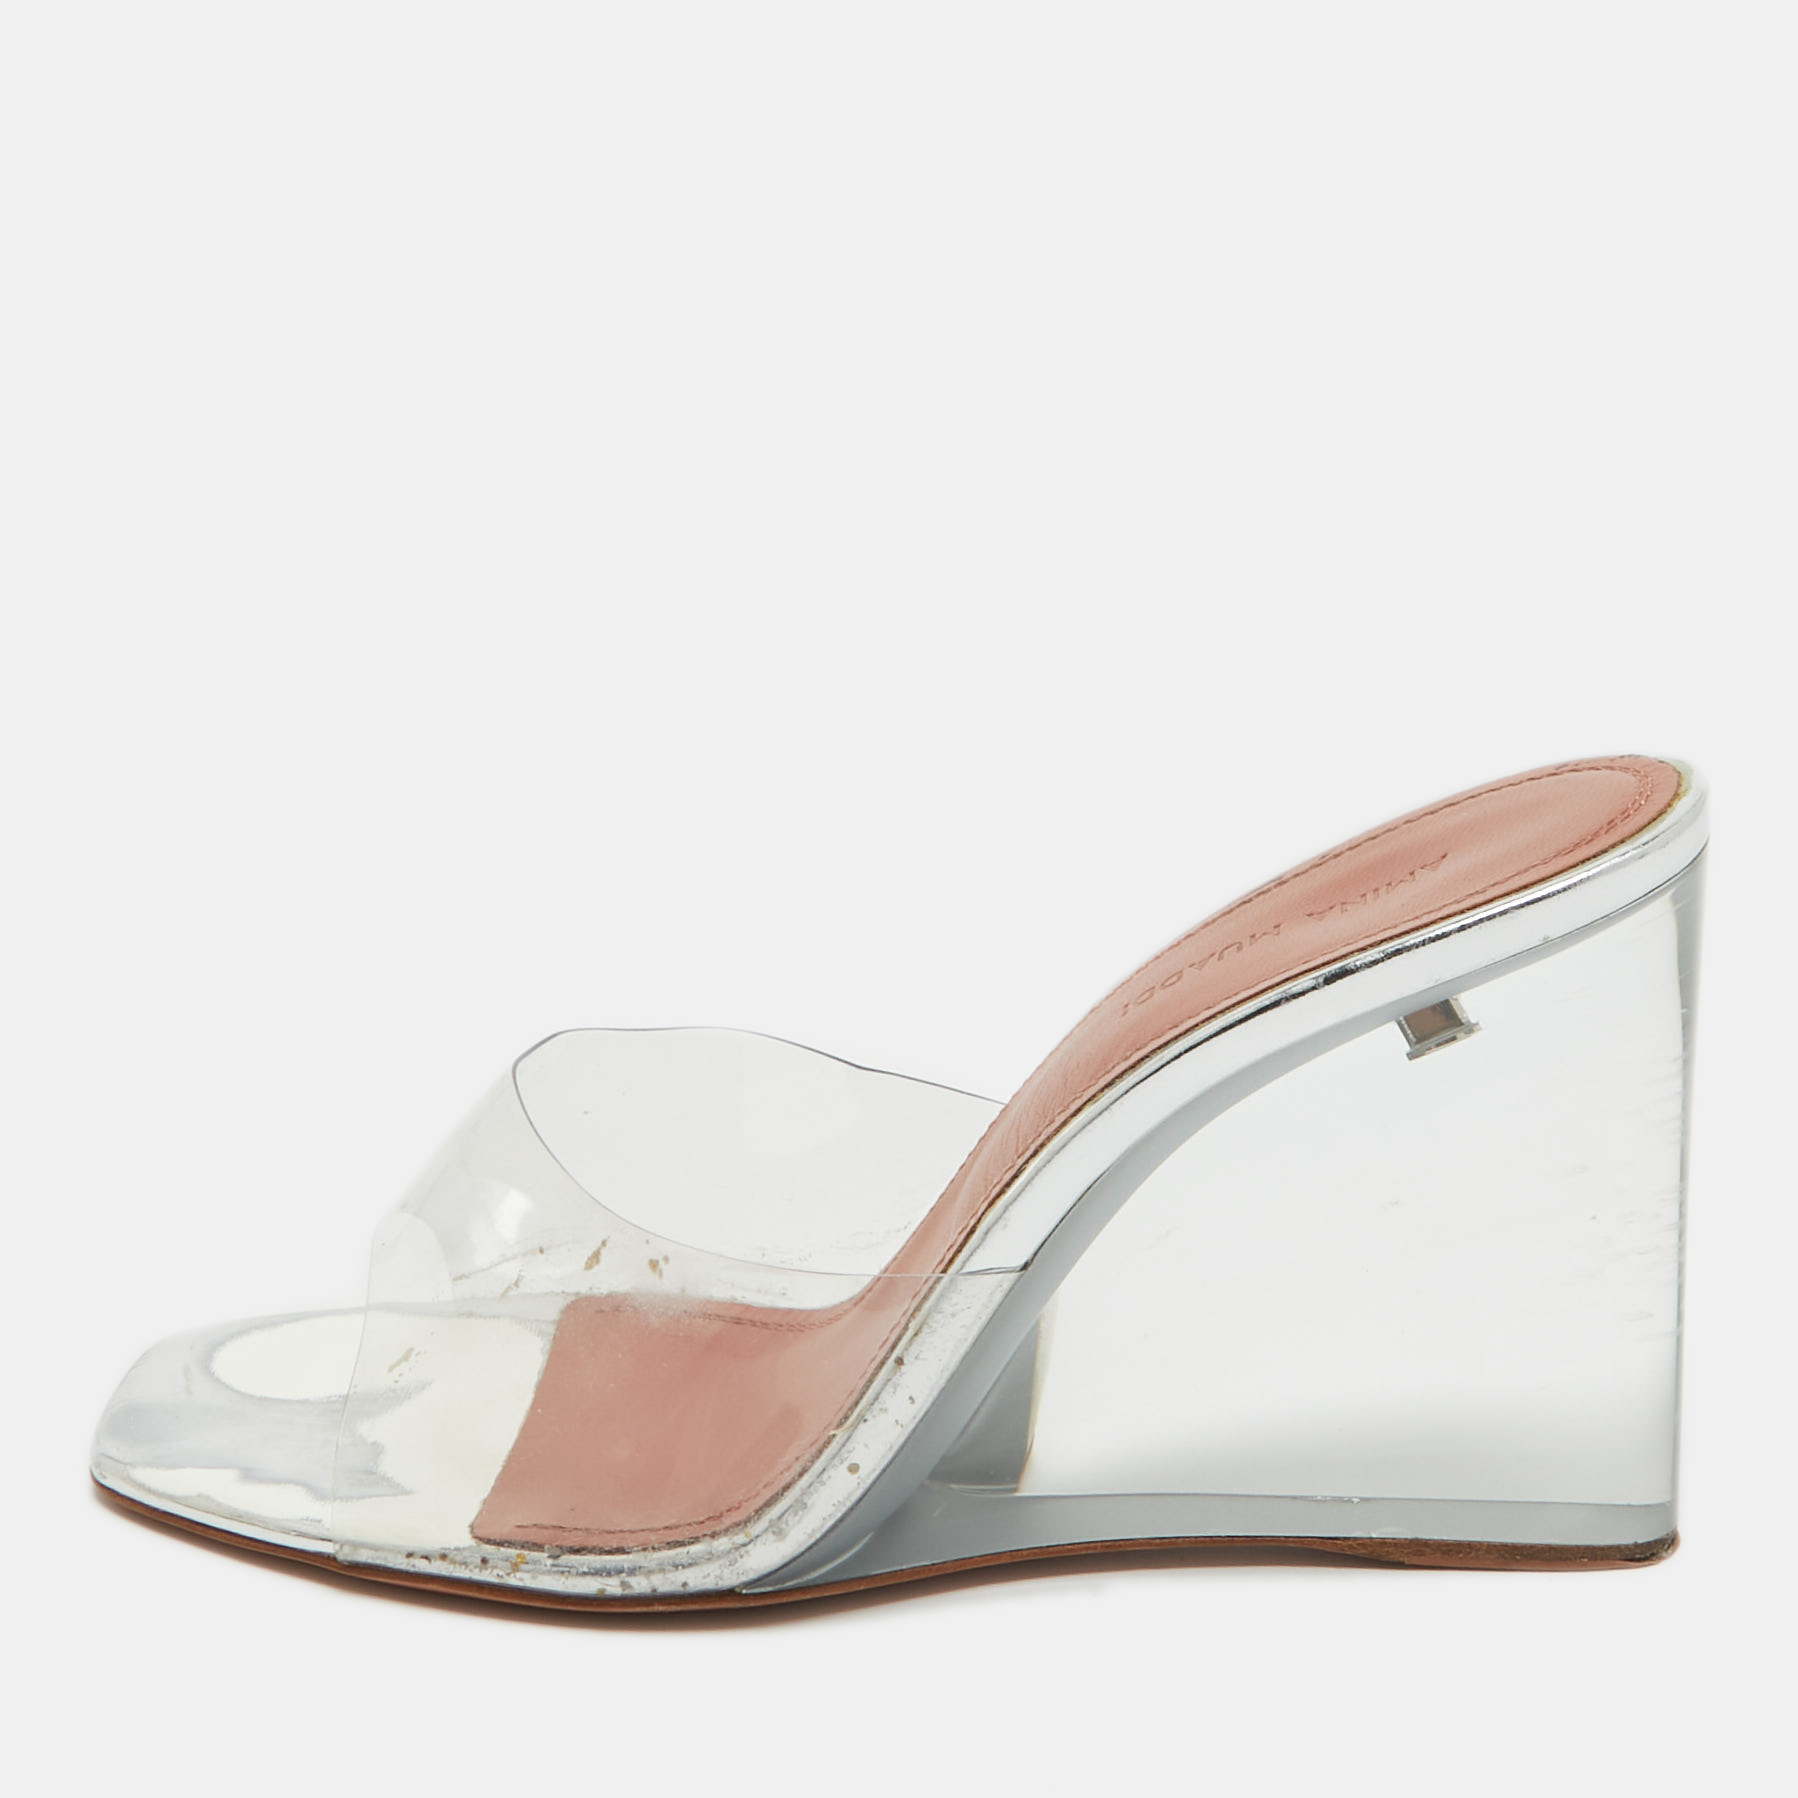 Amina muaddi transparent pvc lupita wedge sandals size 38